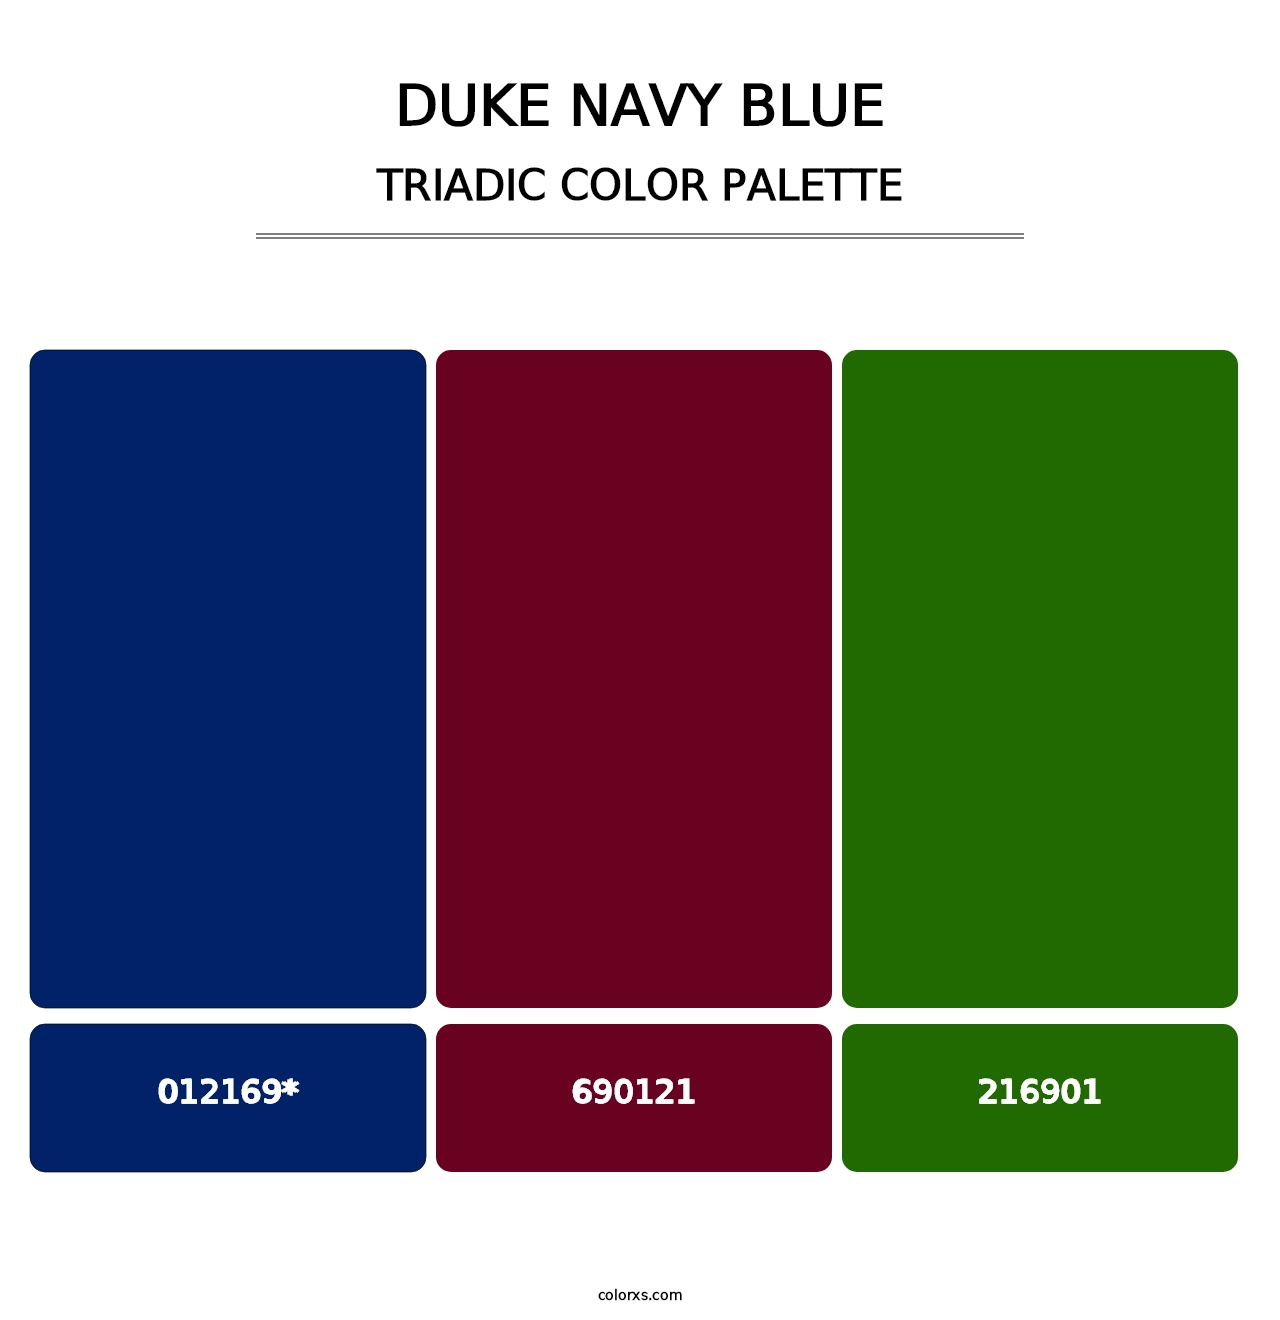 Duke Navy Blue - Triadic Color Palette